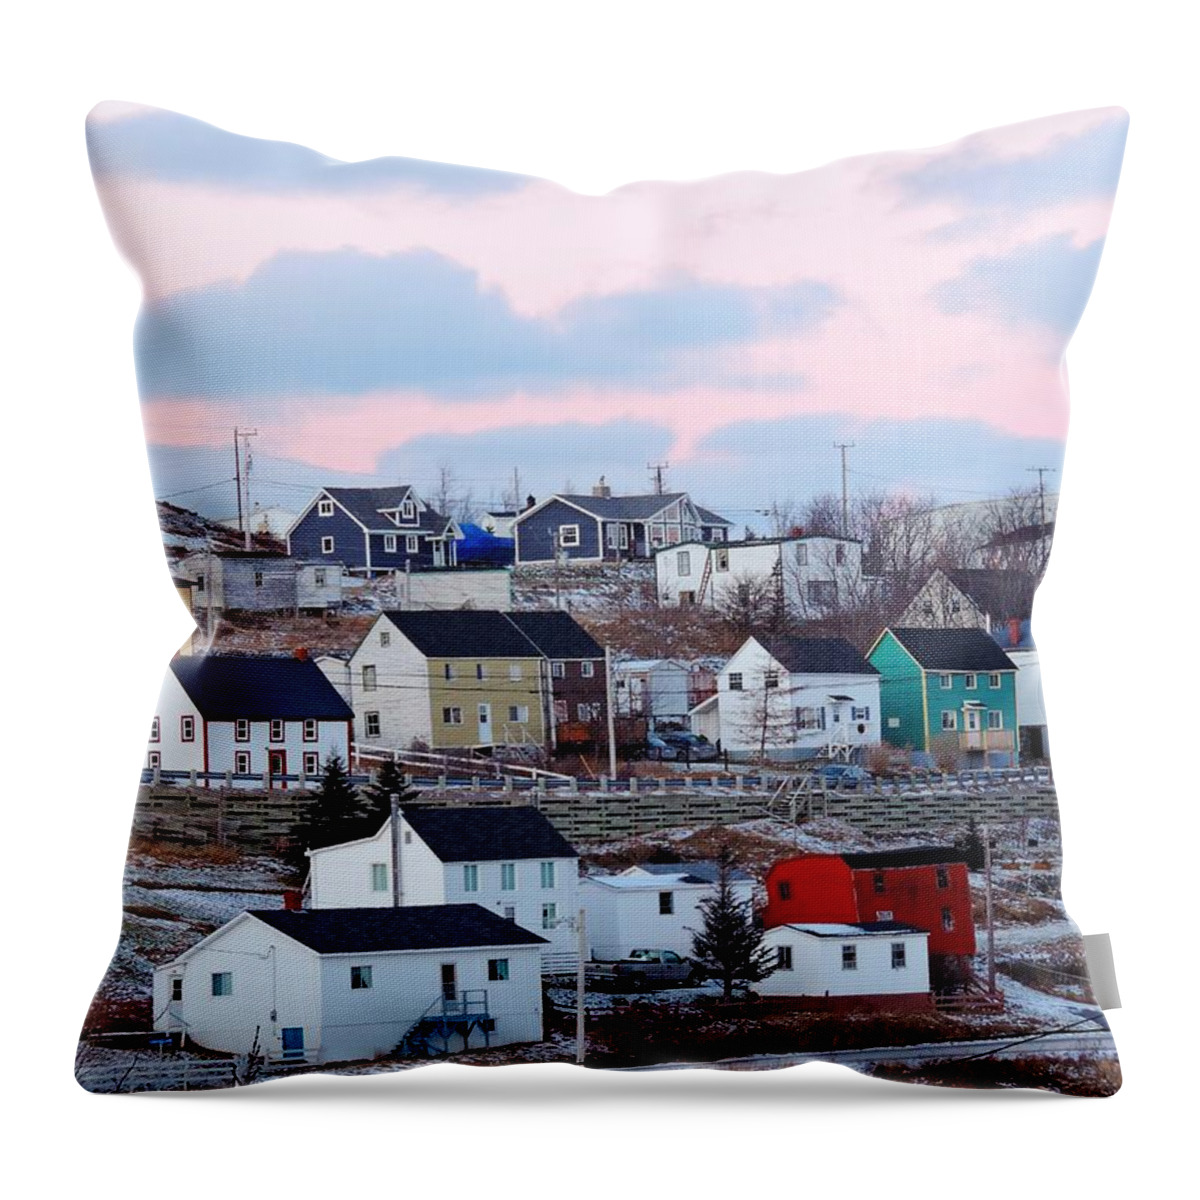 Jelly Bean Houses Throw Pillow featuring the photograph Bonavista by Zinvolle Art